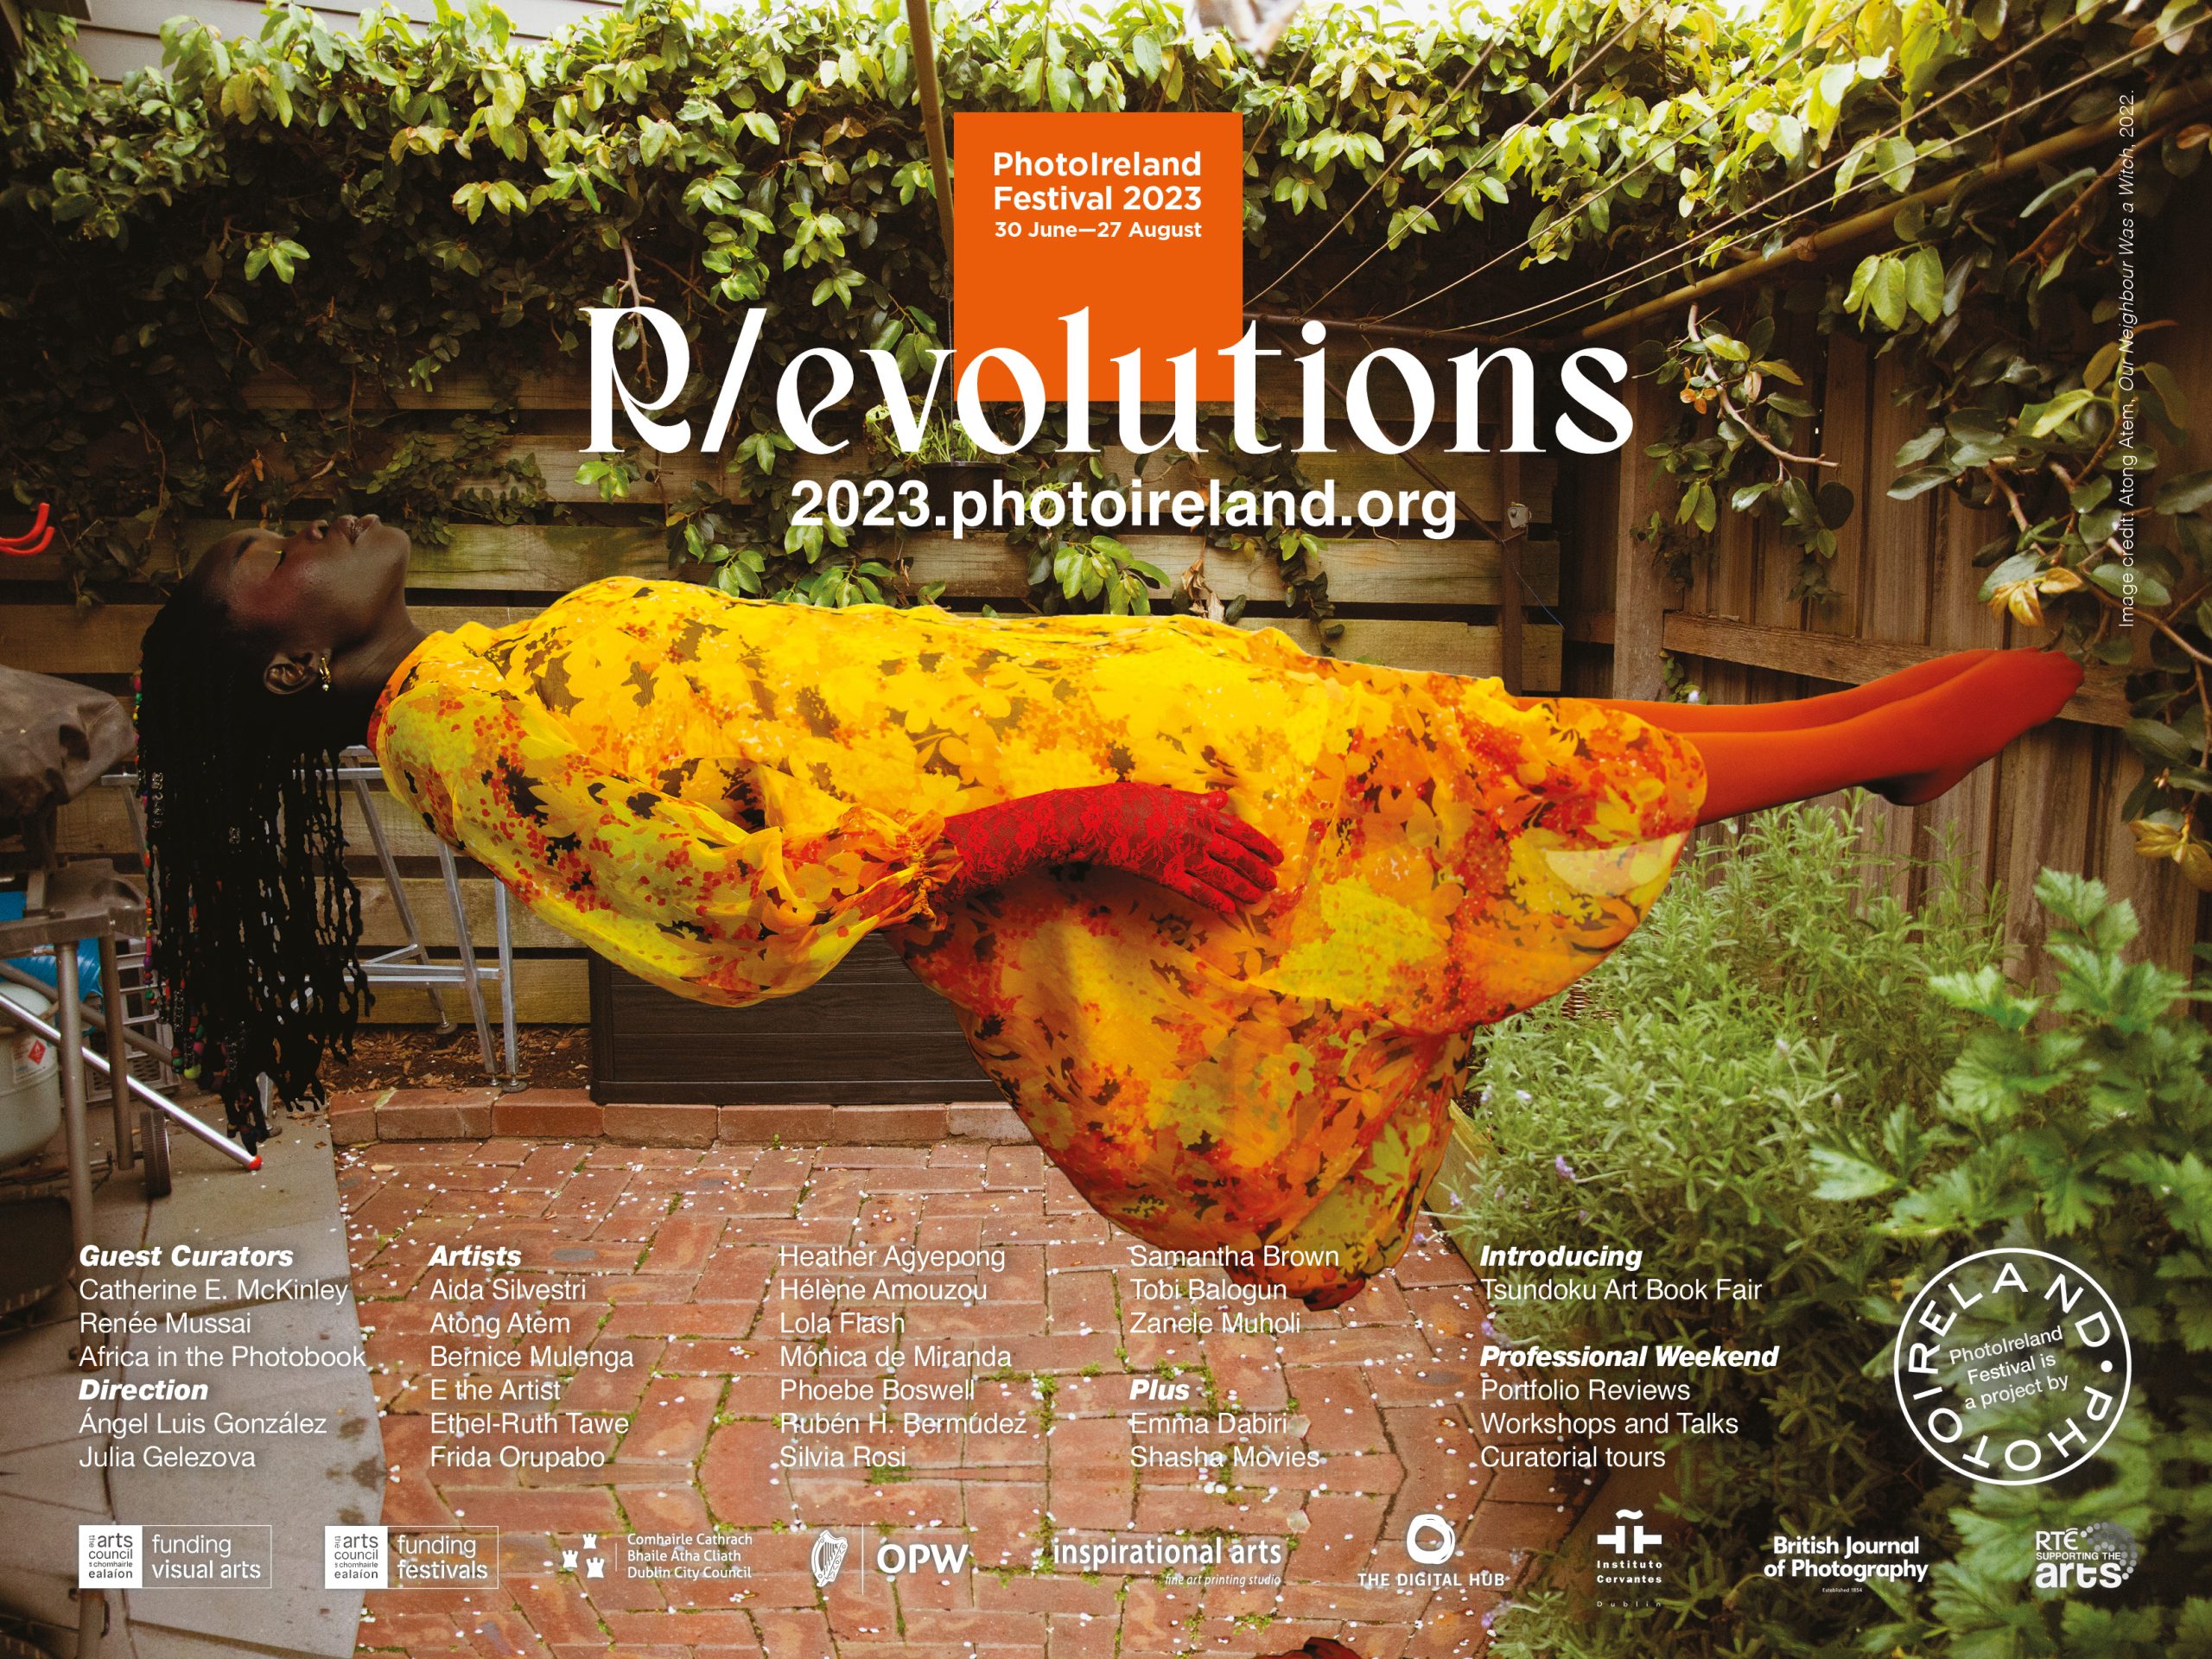 PhotoIreland Festival 2023 - R/evolutions